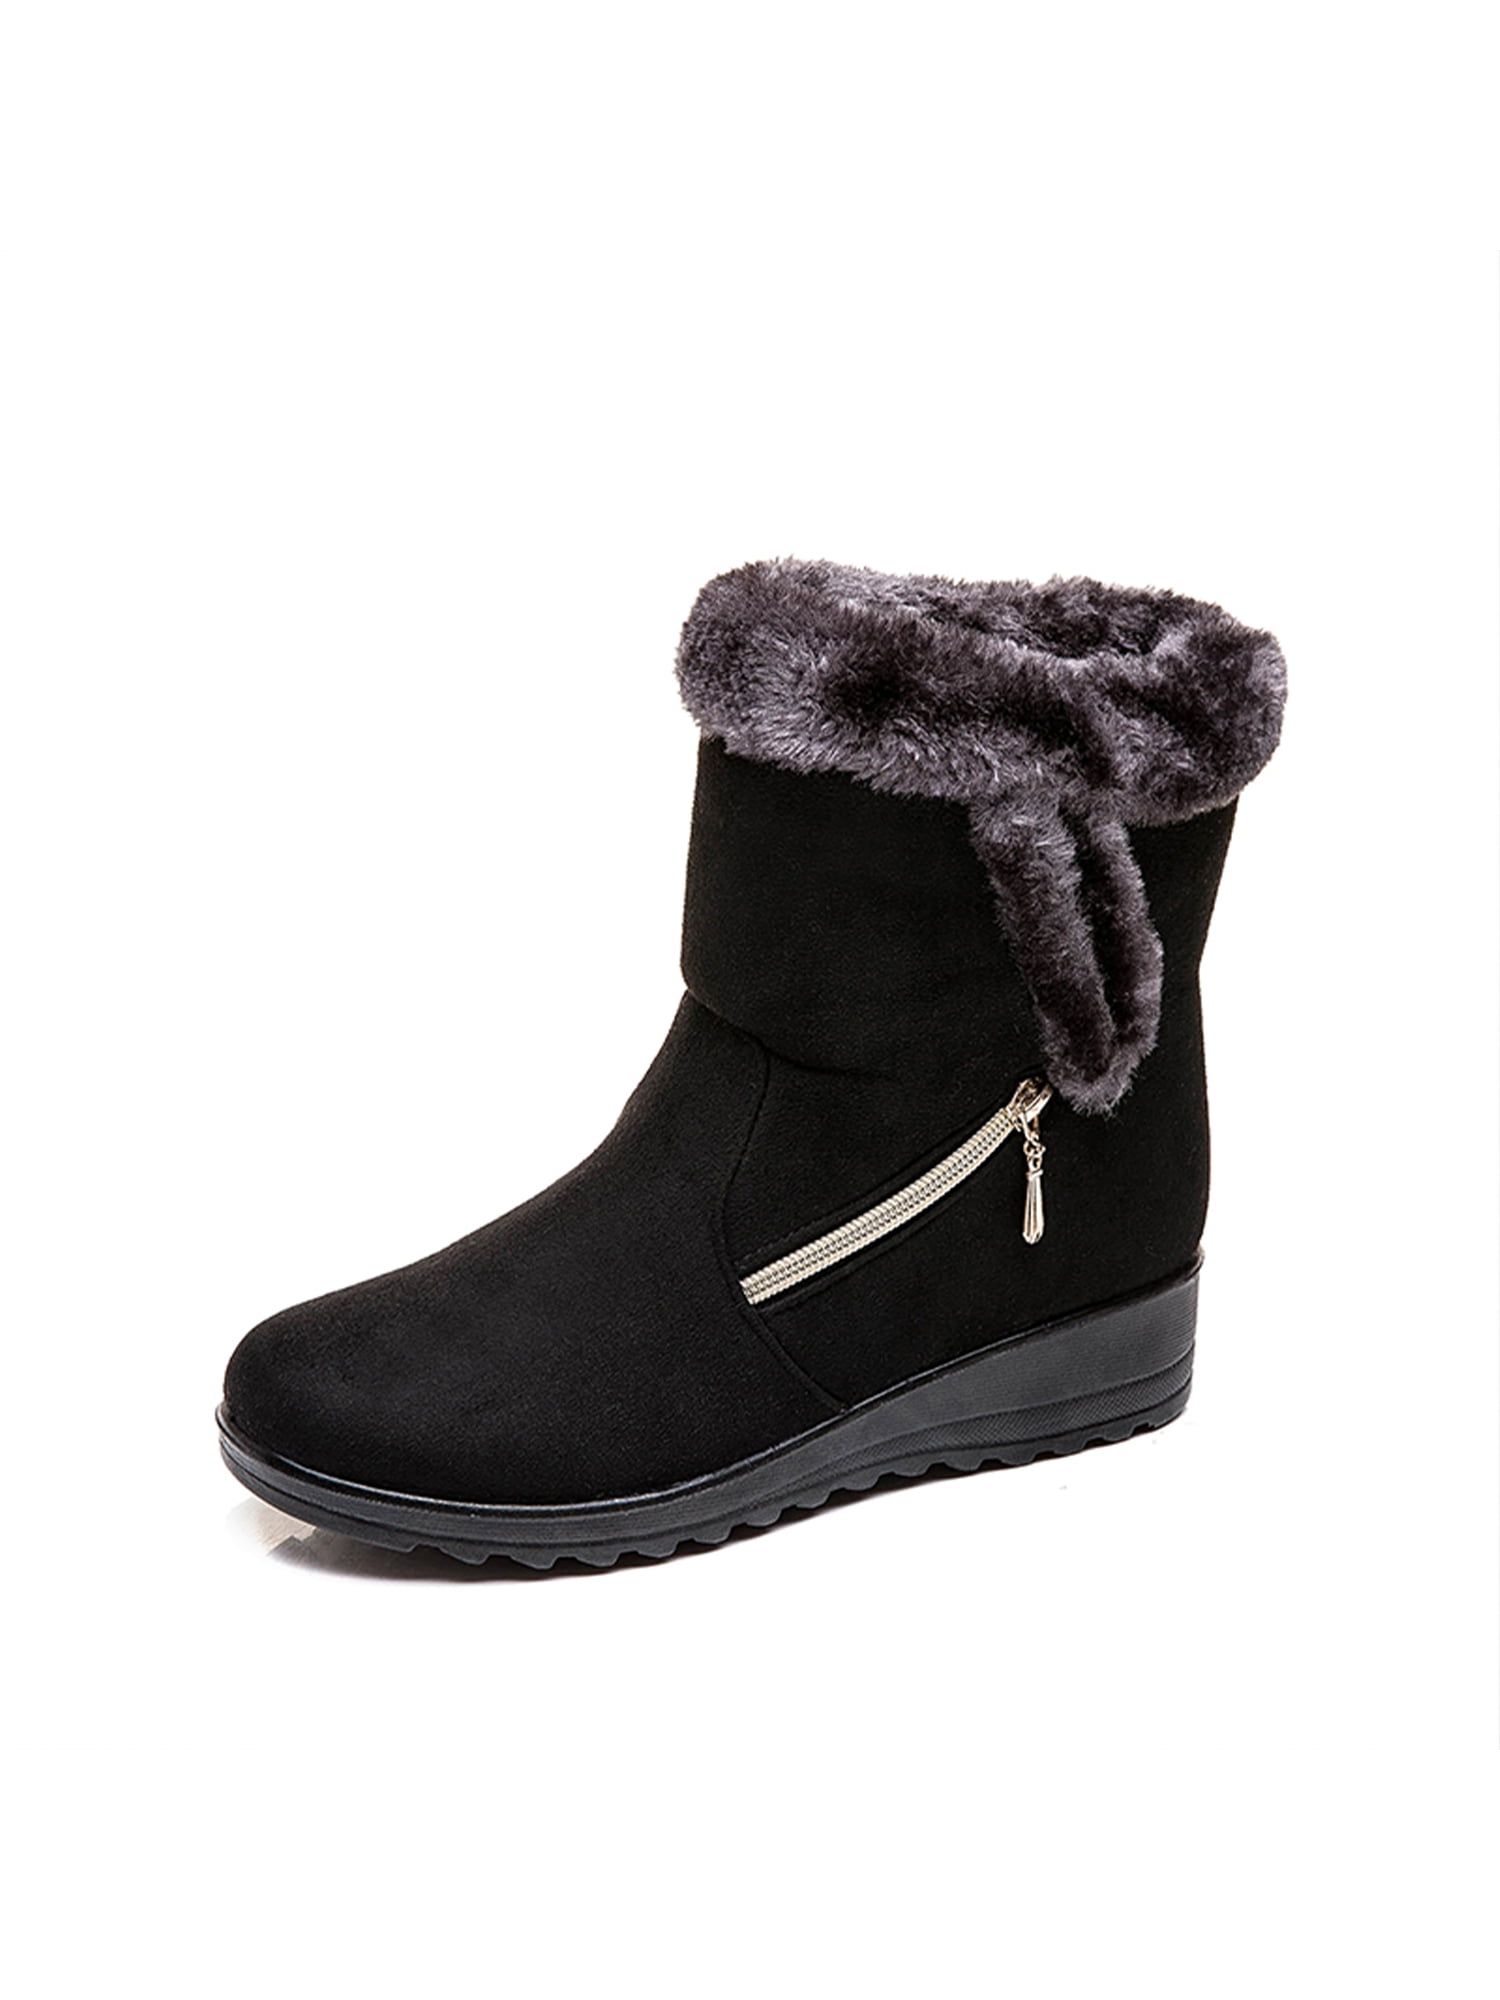 Waterproof Winter Women Shoes Snow Boots Fur-lined Slip On Warm Ankle US Size 10 